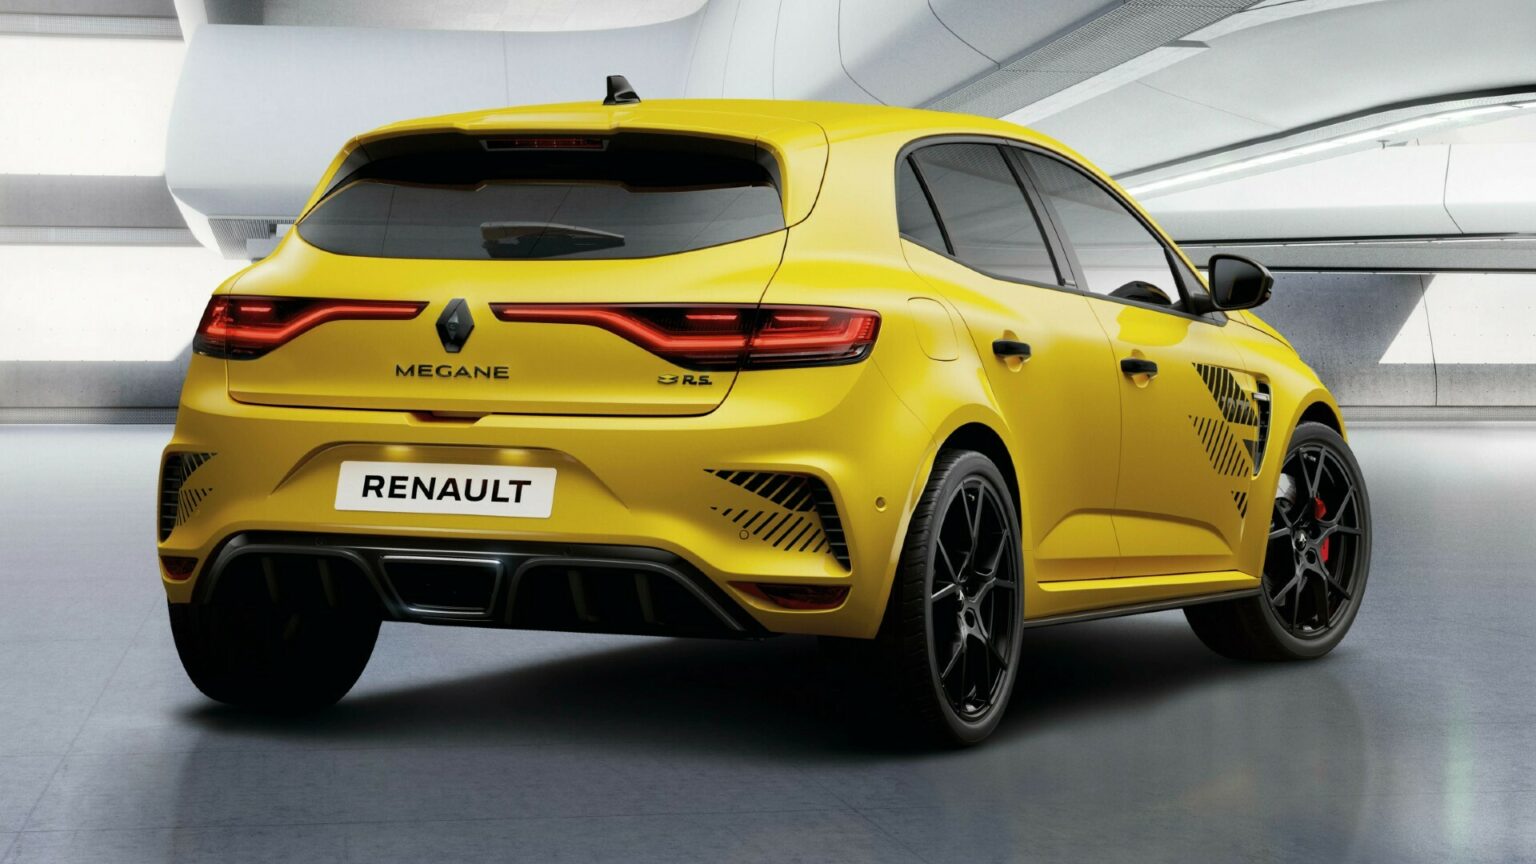 2023 Renault Megane RS Ultime 9 1536x864 1